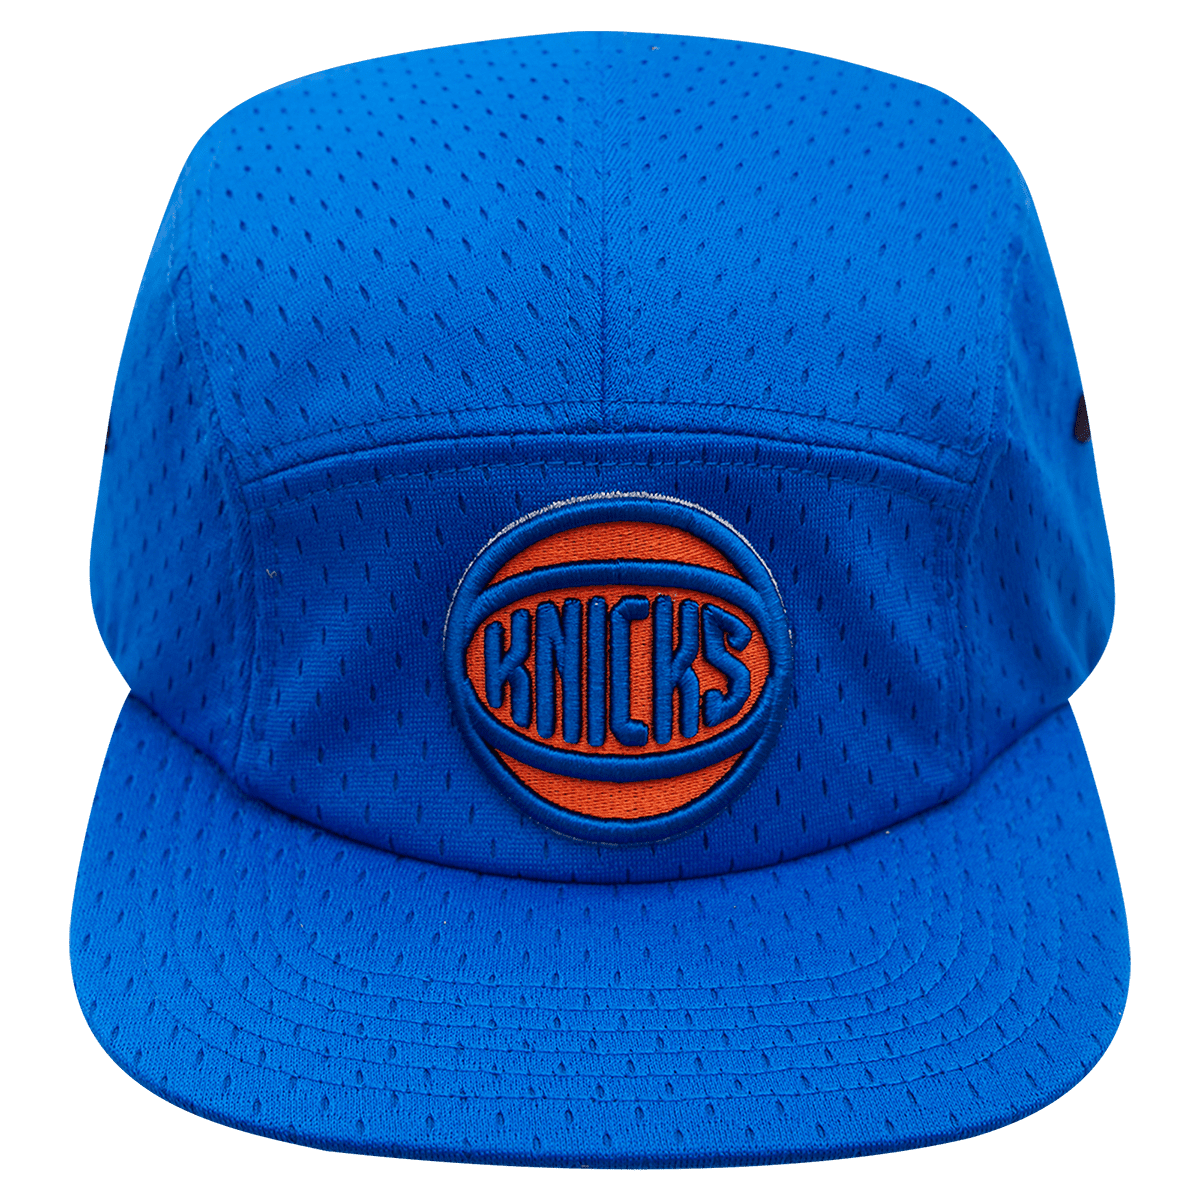 NBA NEW YORK KNICKS LOGO MESH UNISEX 5 PANEL HAT (ROYAL BLUE)